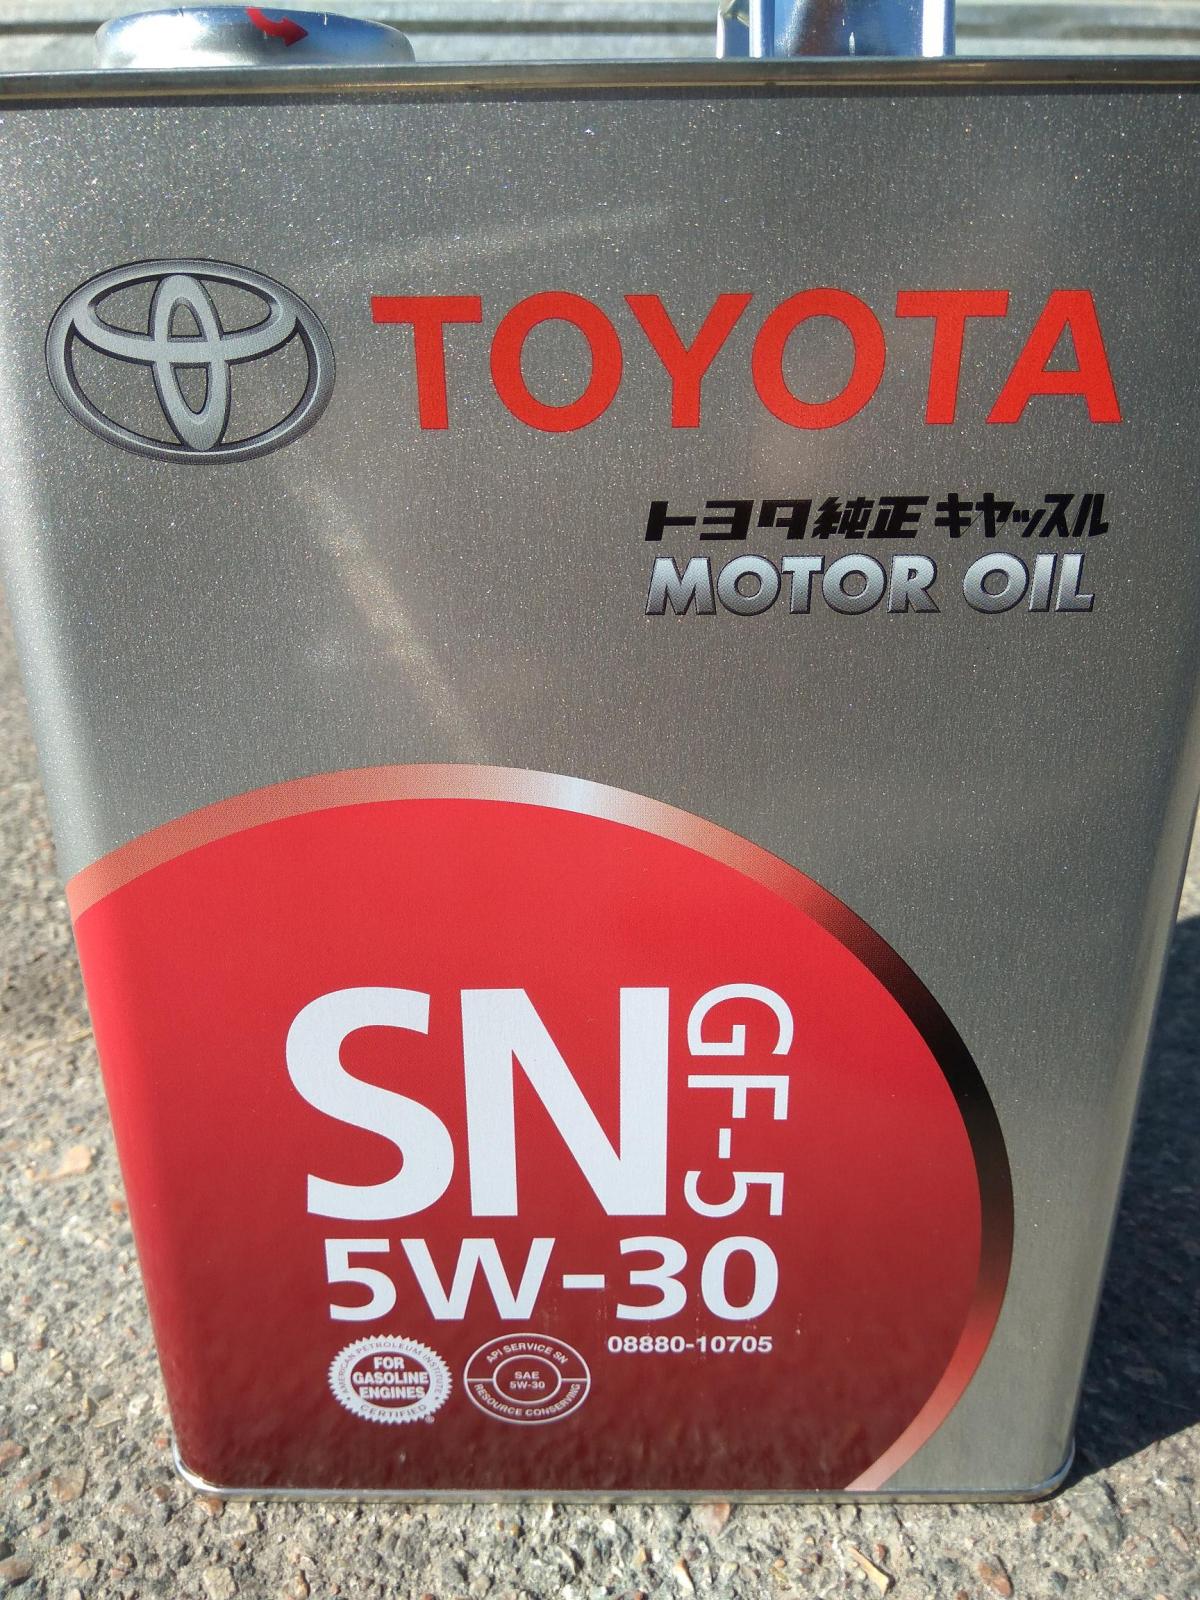 Toyota 5w30 4л. Тойота 5w30 4л. Toyota 5w-30 (08880-83853l). Toyota SN Plus 5w30. Автомасла Toyota 5w30.